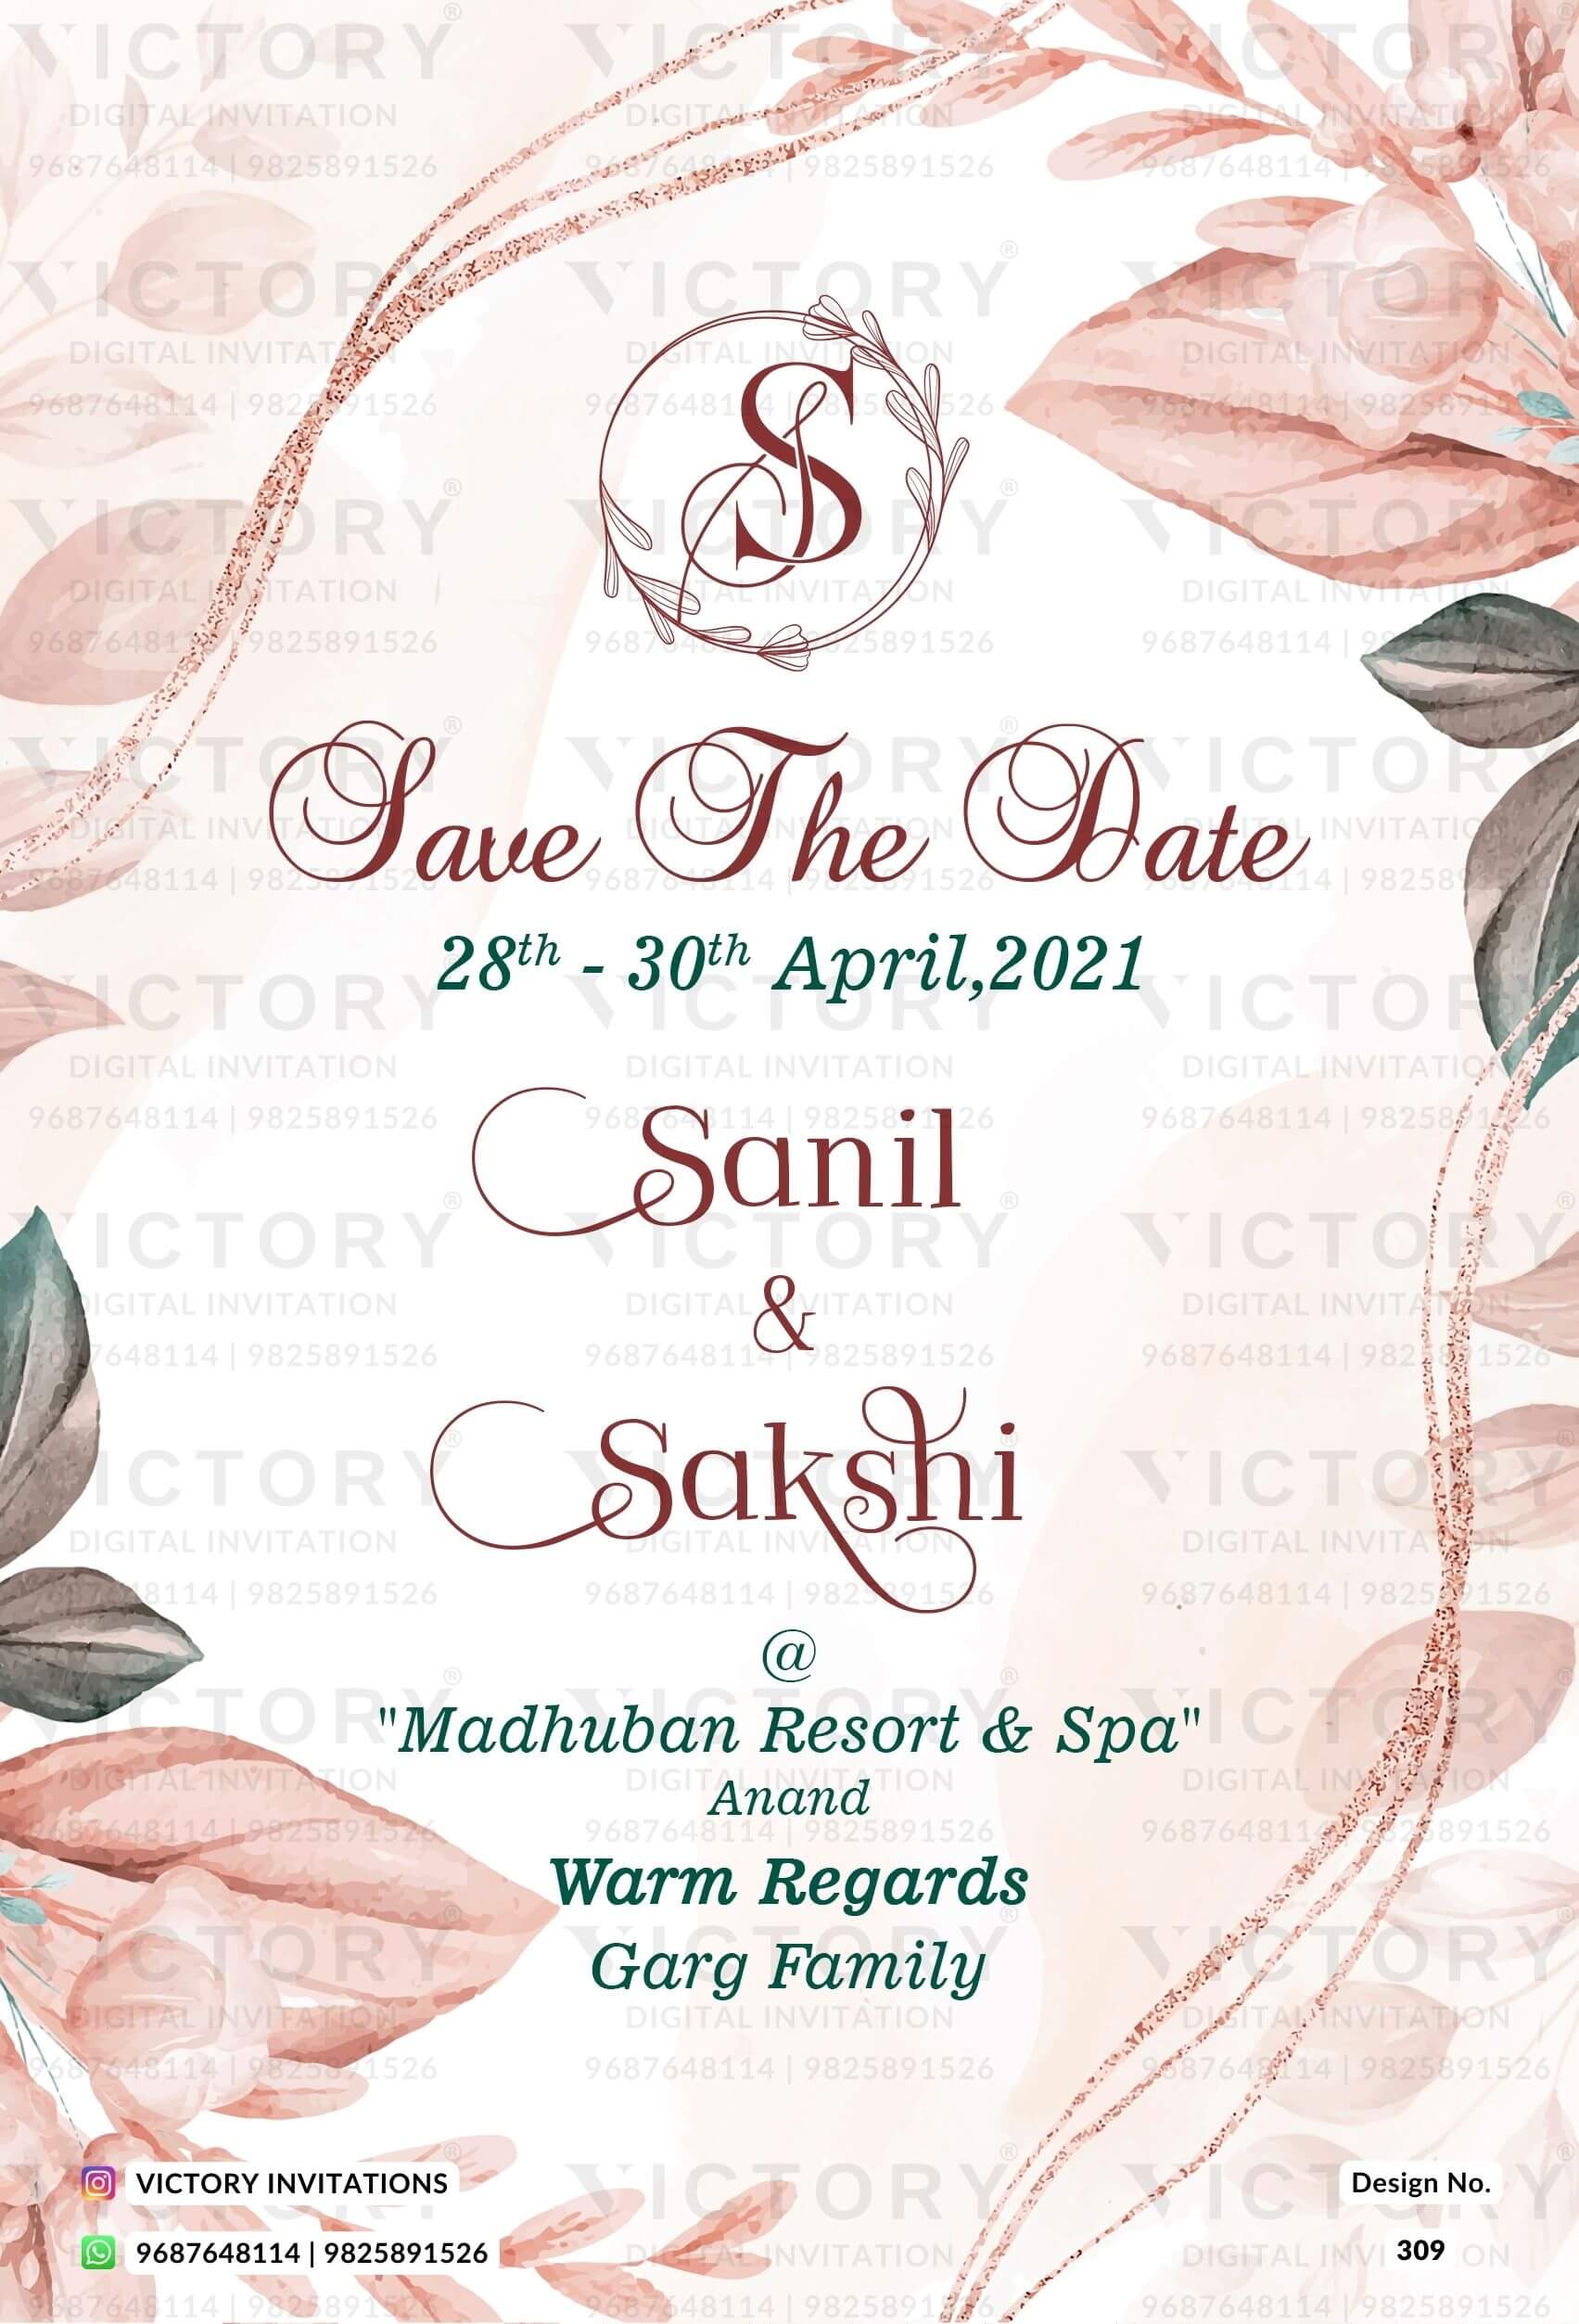 Save the Date digital invitation card design no.309